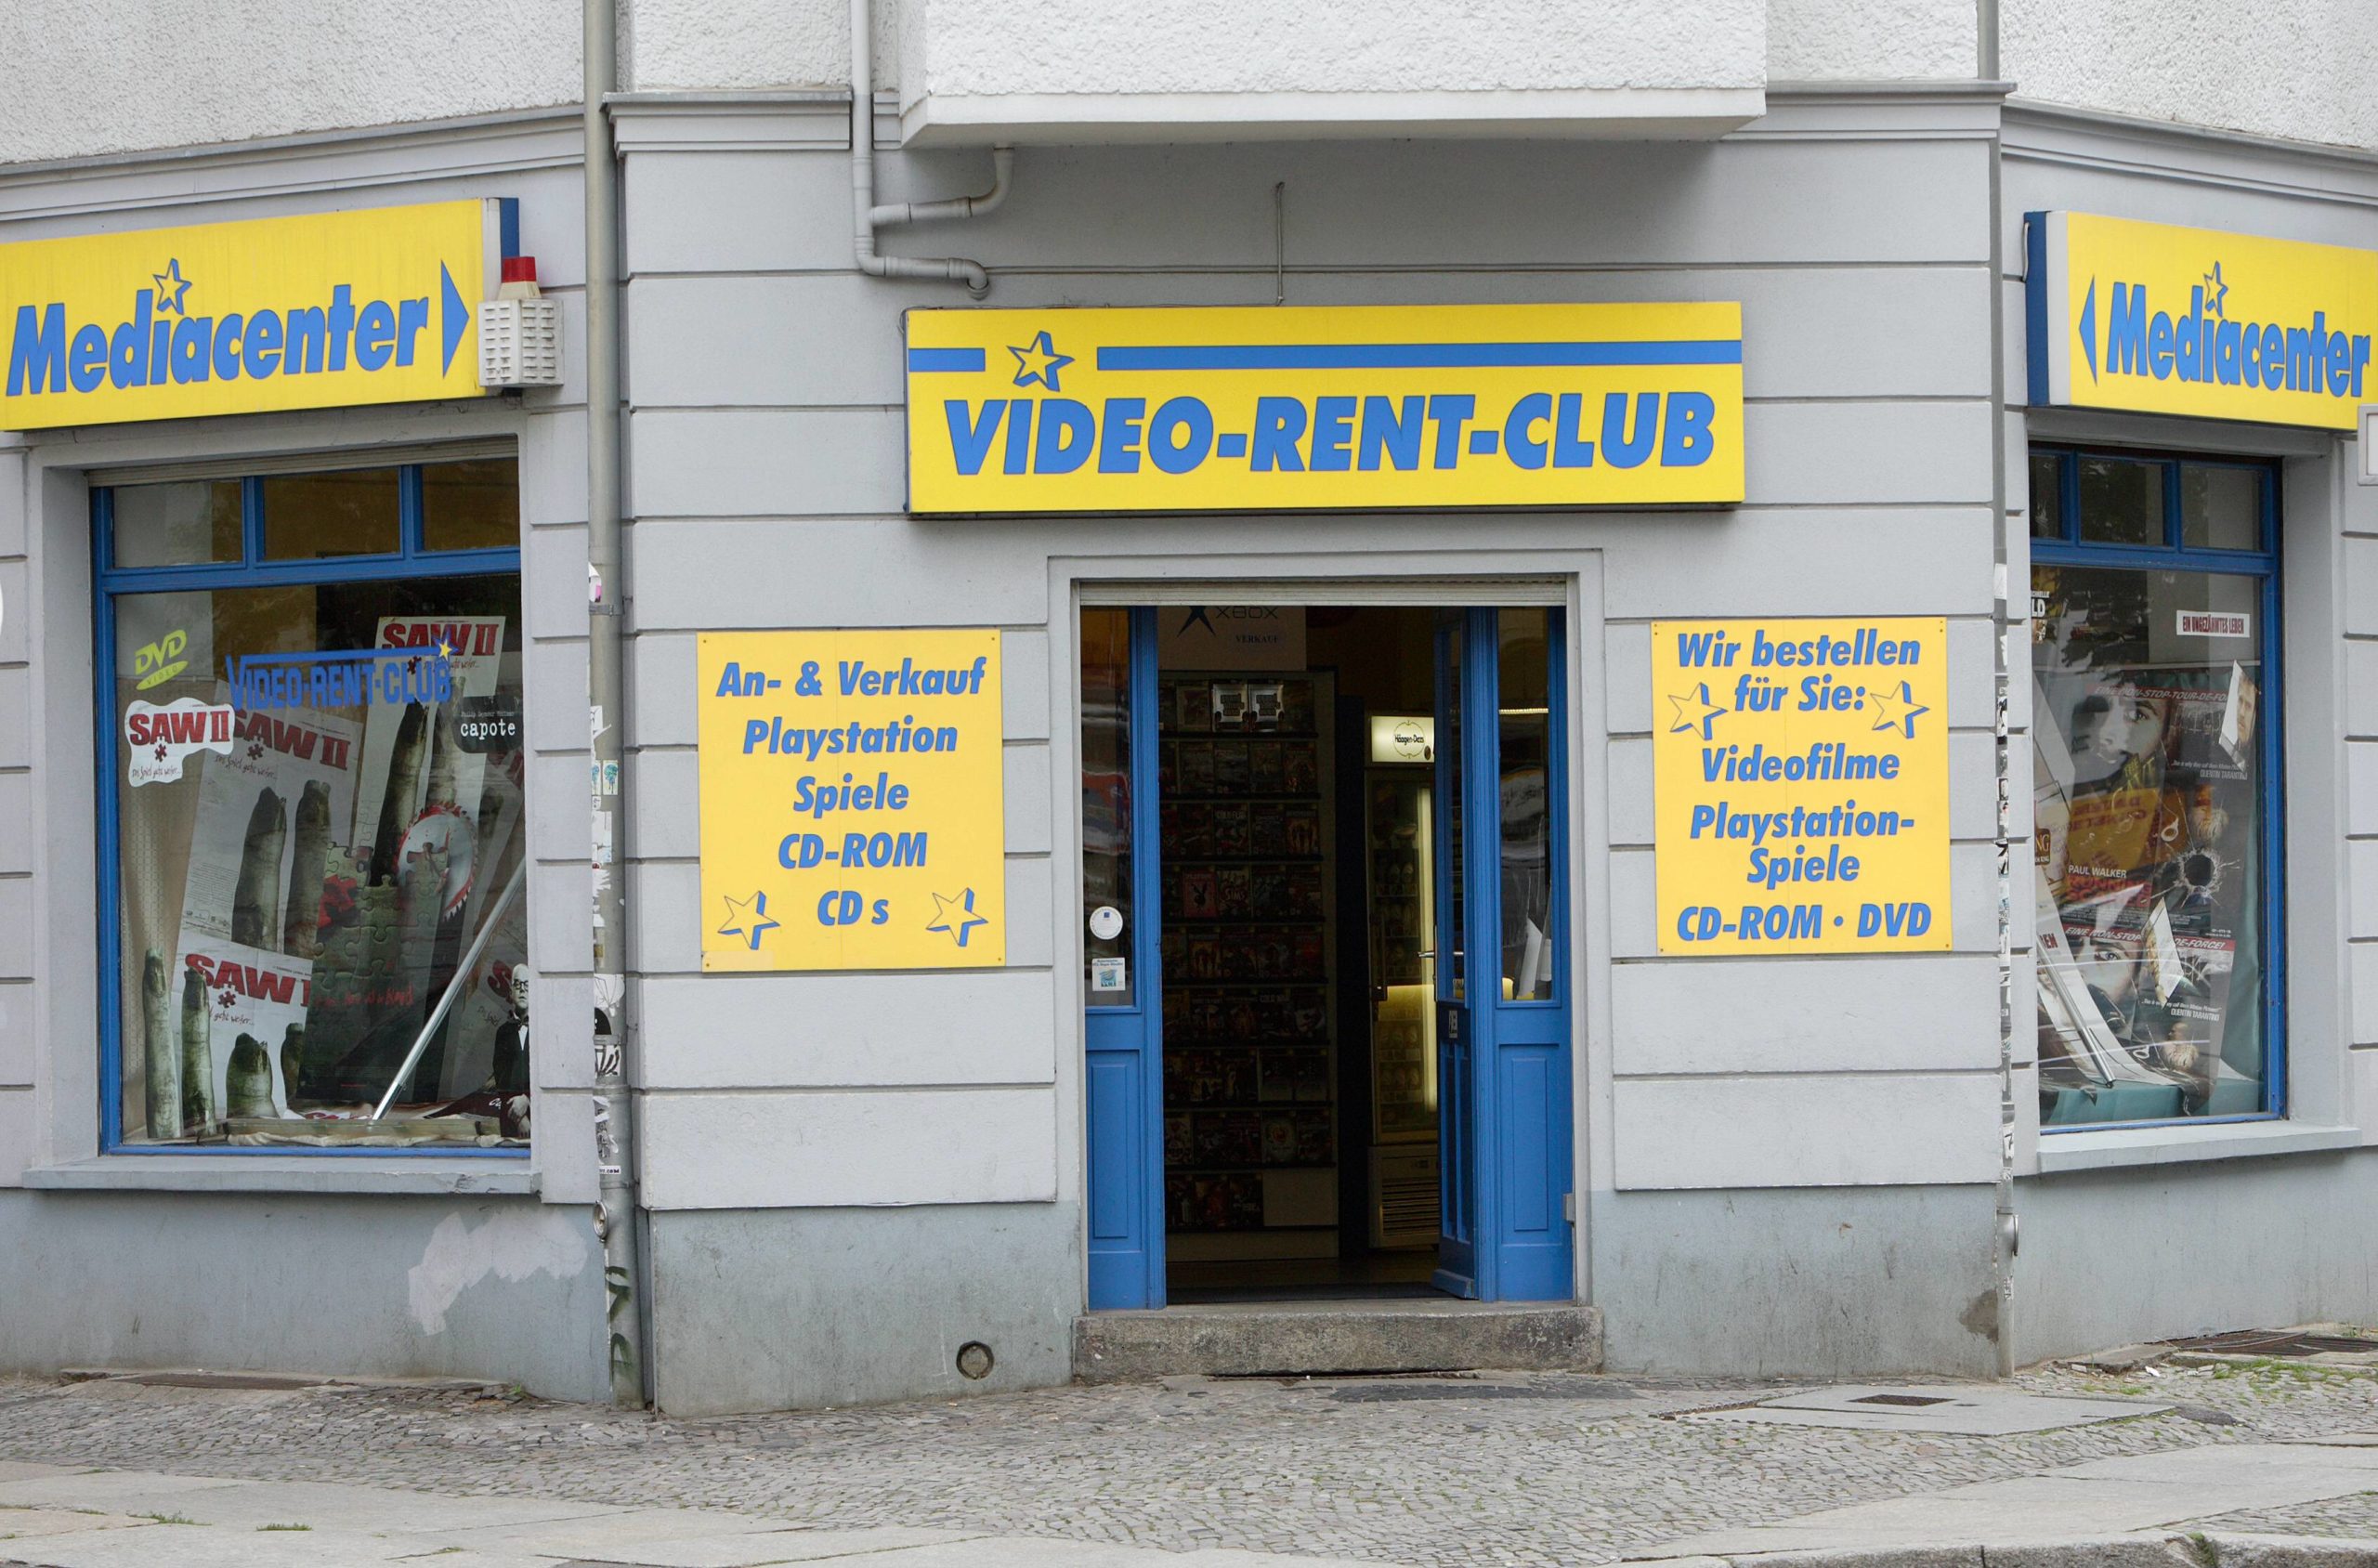 Video-Rent-Club in Friedrichshain, 2006. Foto: Imago/Enters